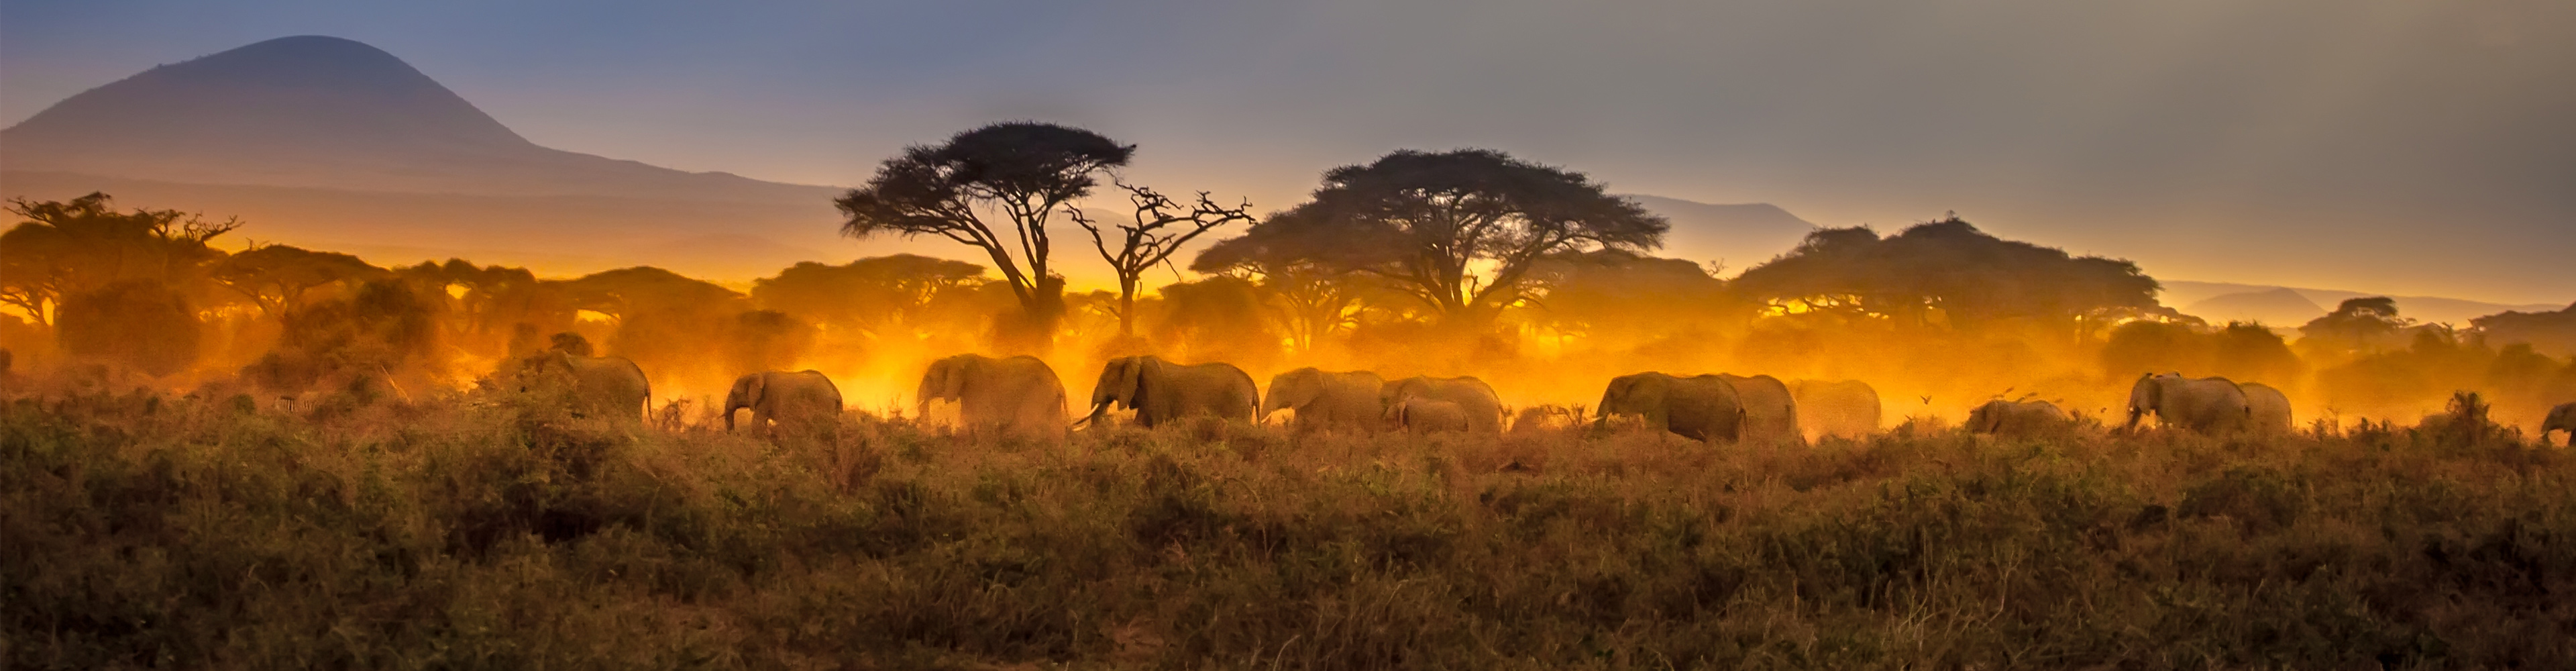 Kenya: Wildlife Rangers Expedition